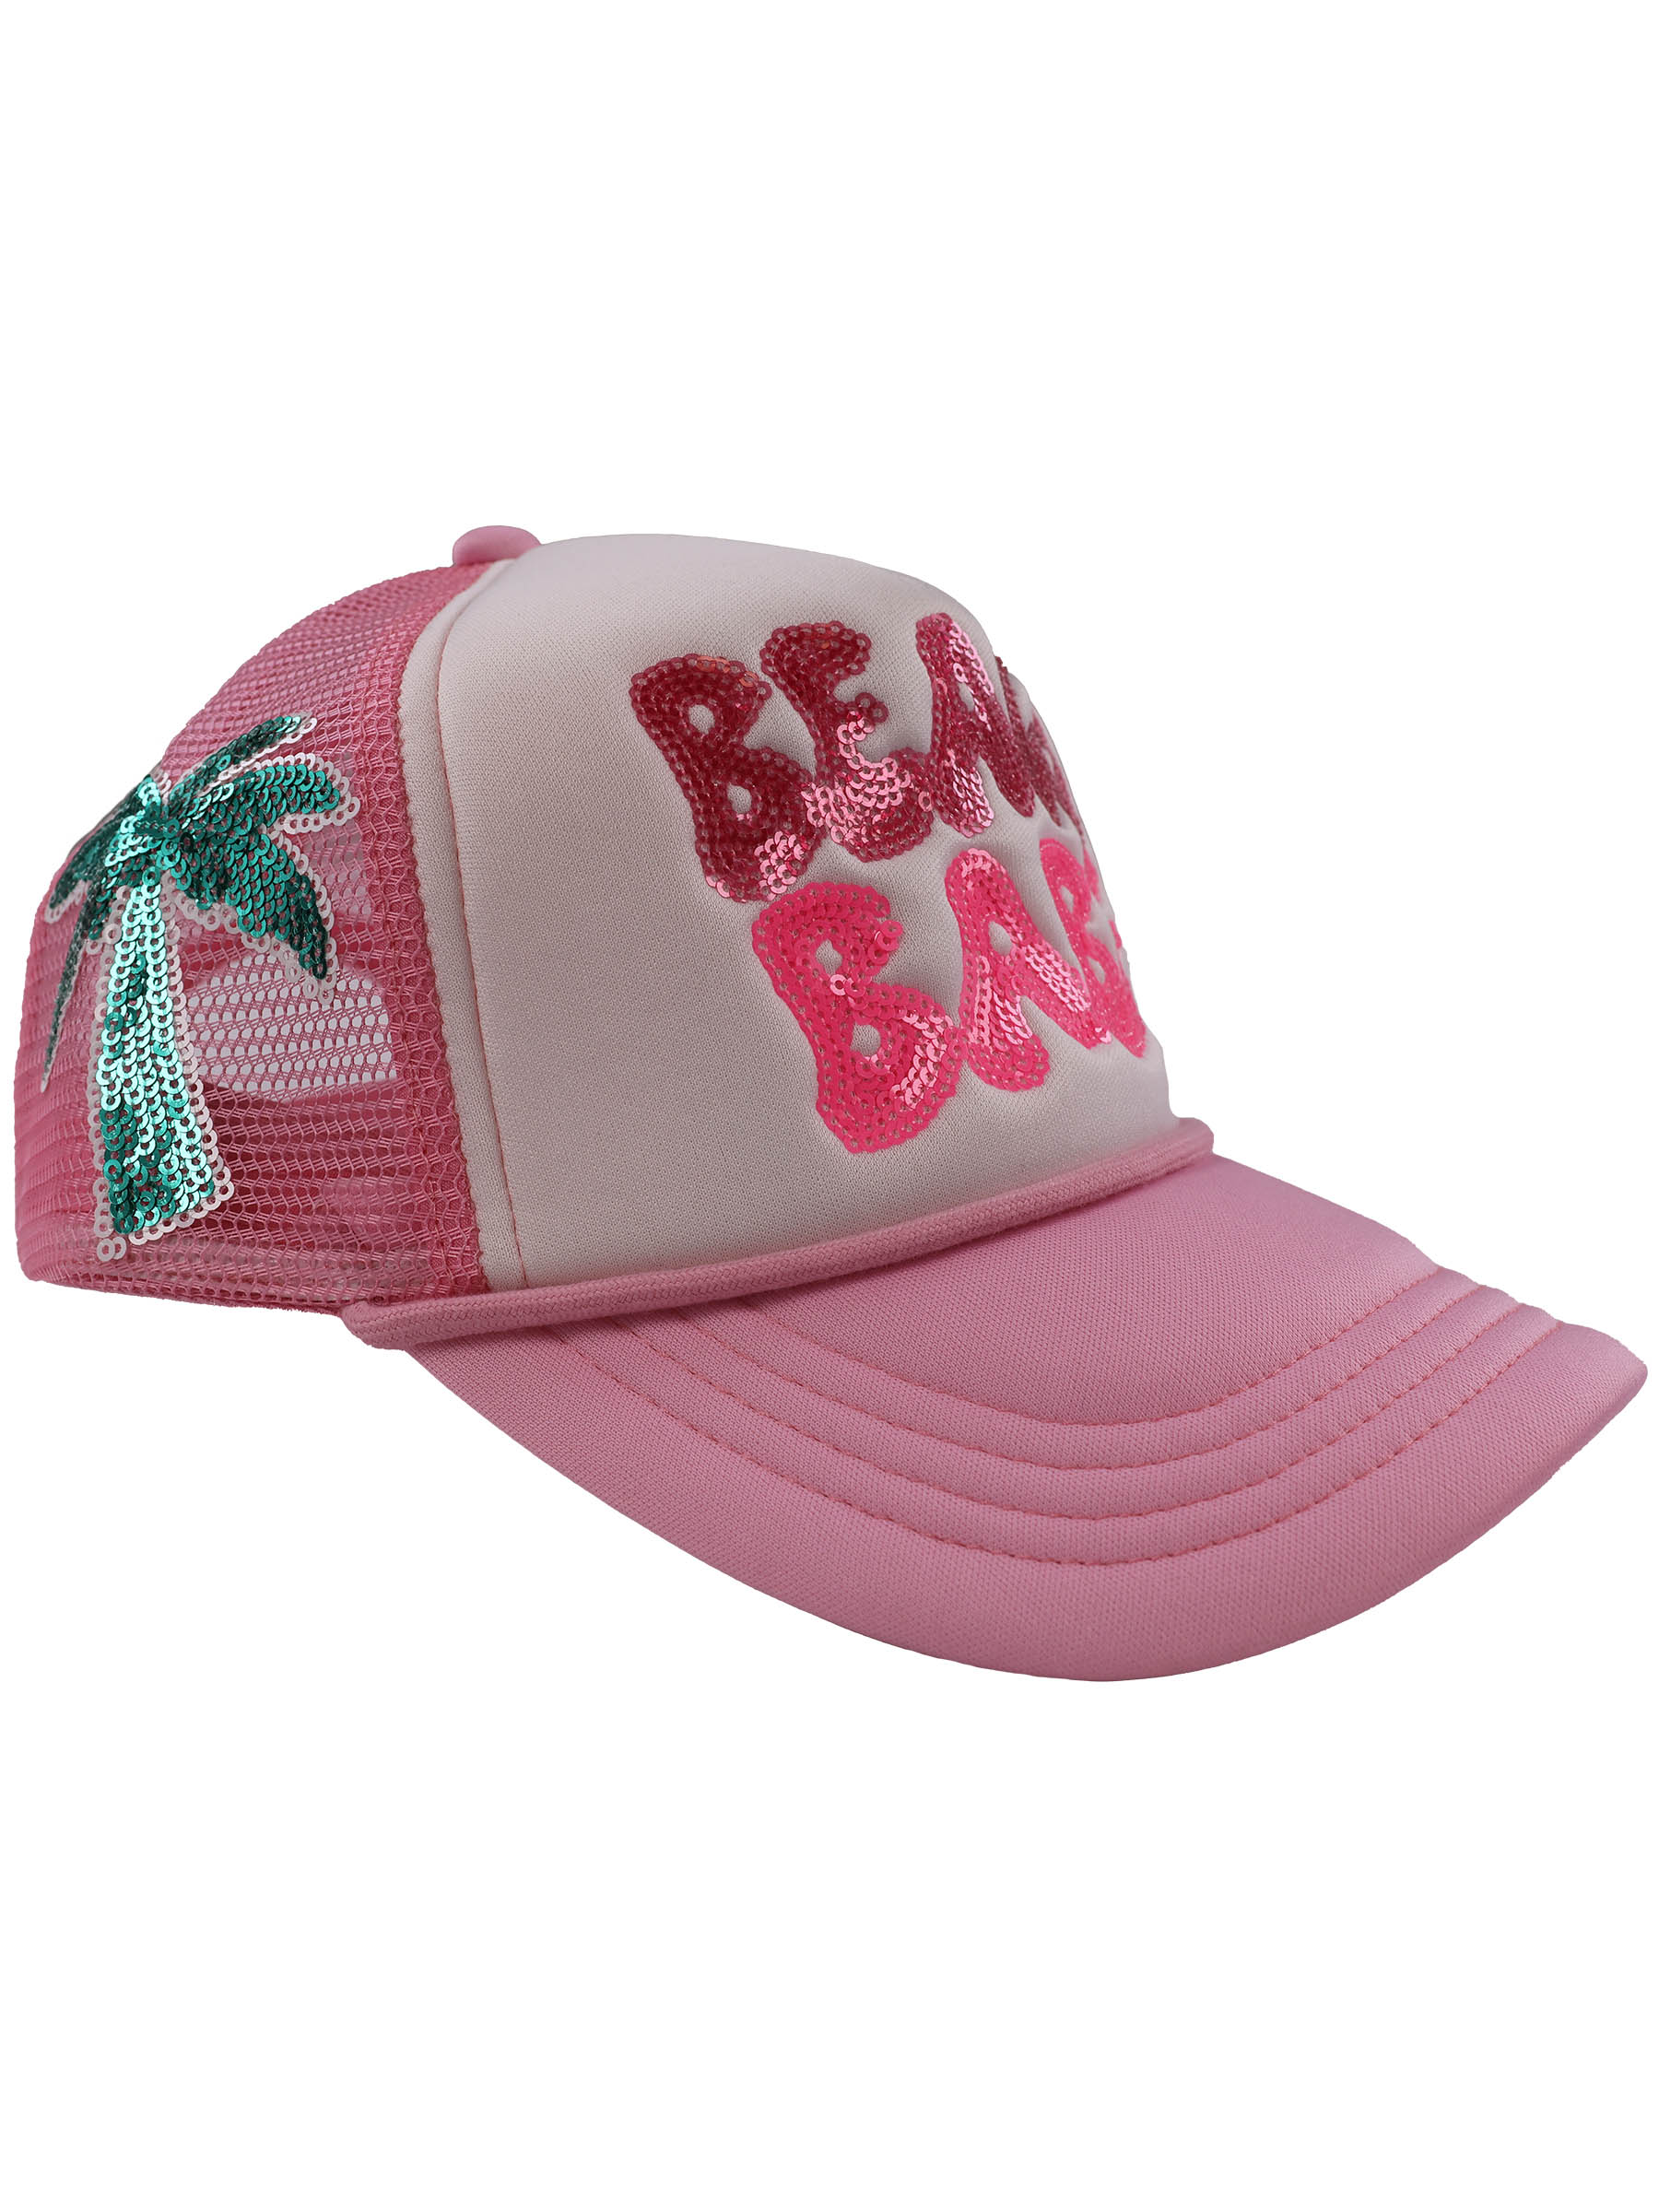 SS Beach Babe Cap-Hats-Deadwood South Boutique & Company-Deadwood South Boutique, Women's Fashion Boutique in Henderson, TX